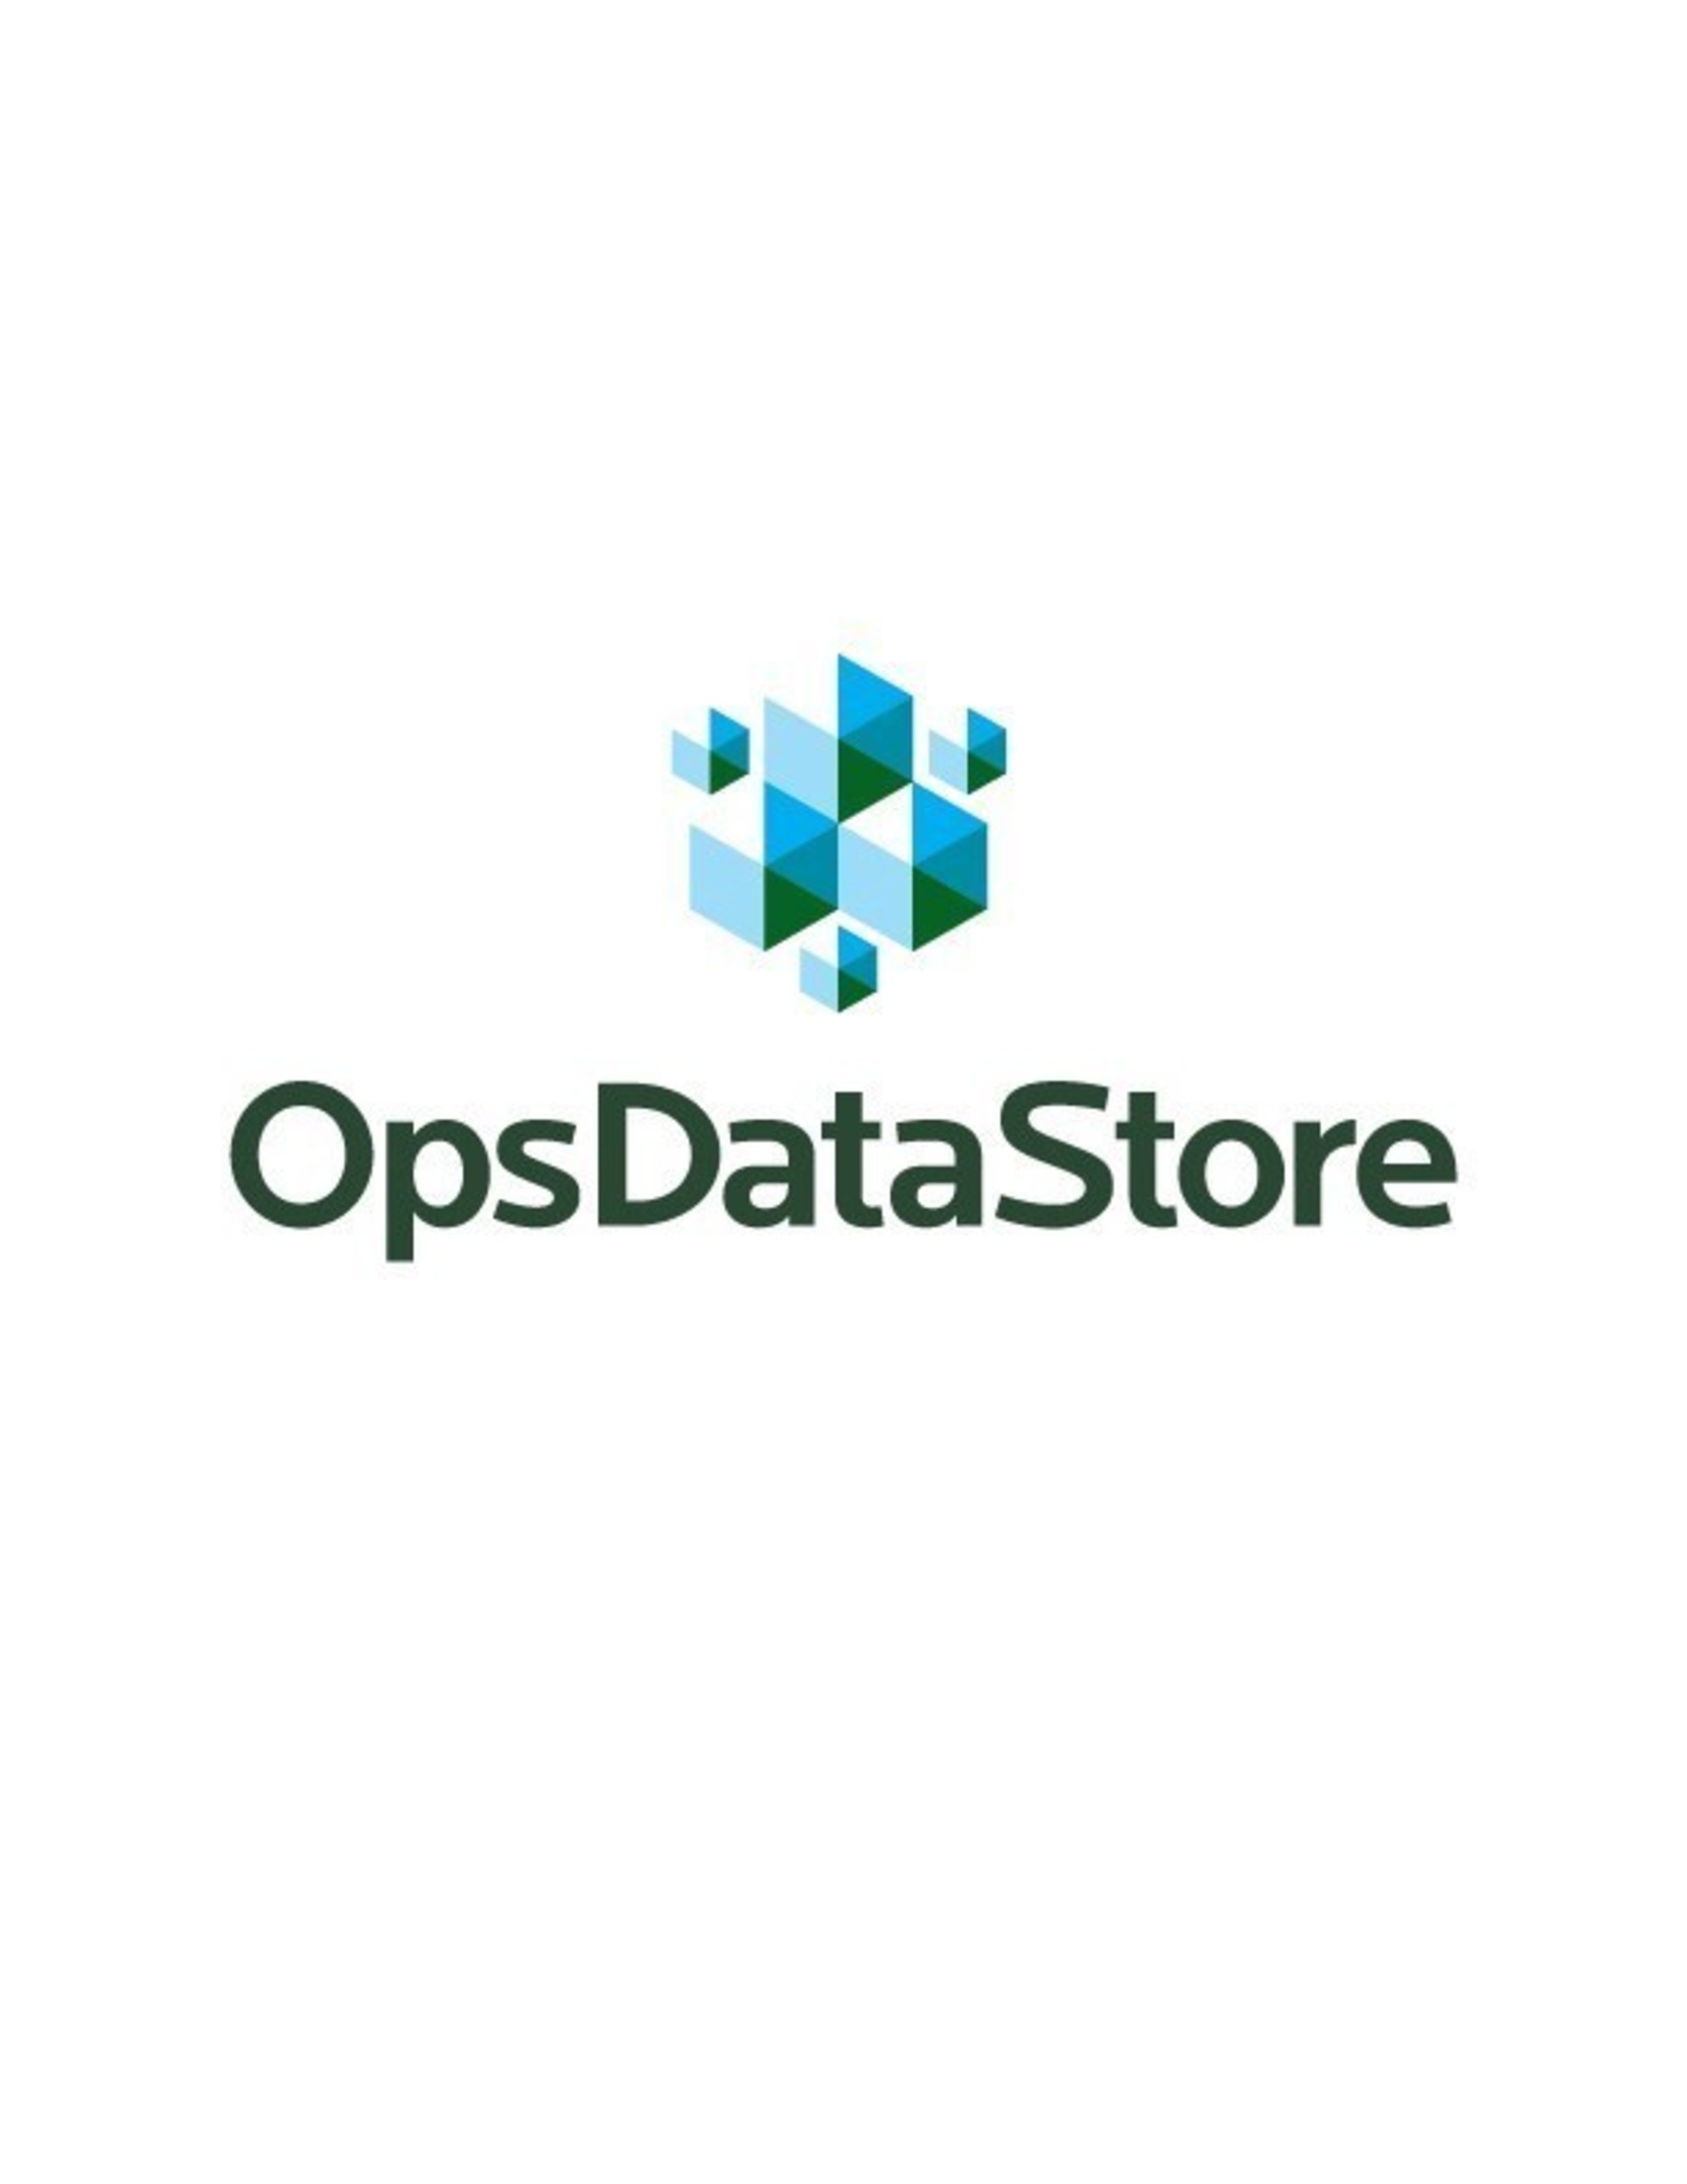 OpsDataStore Logo